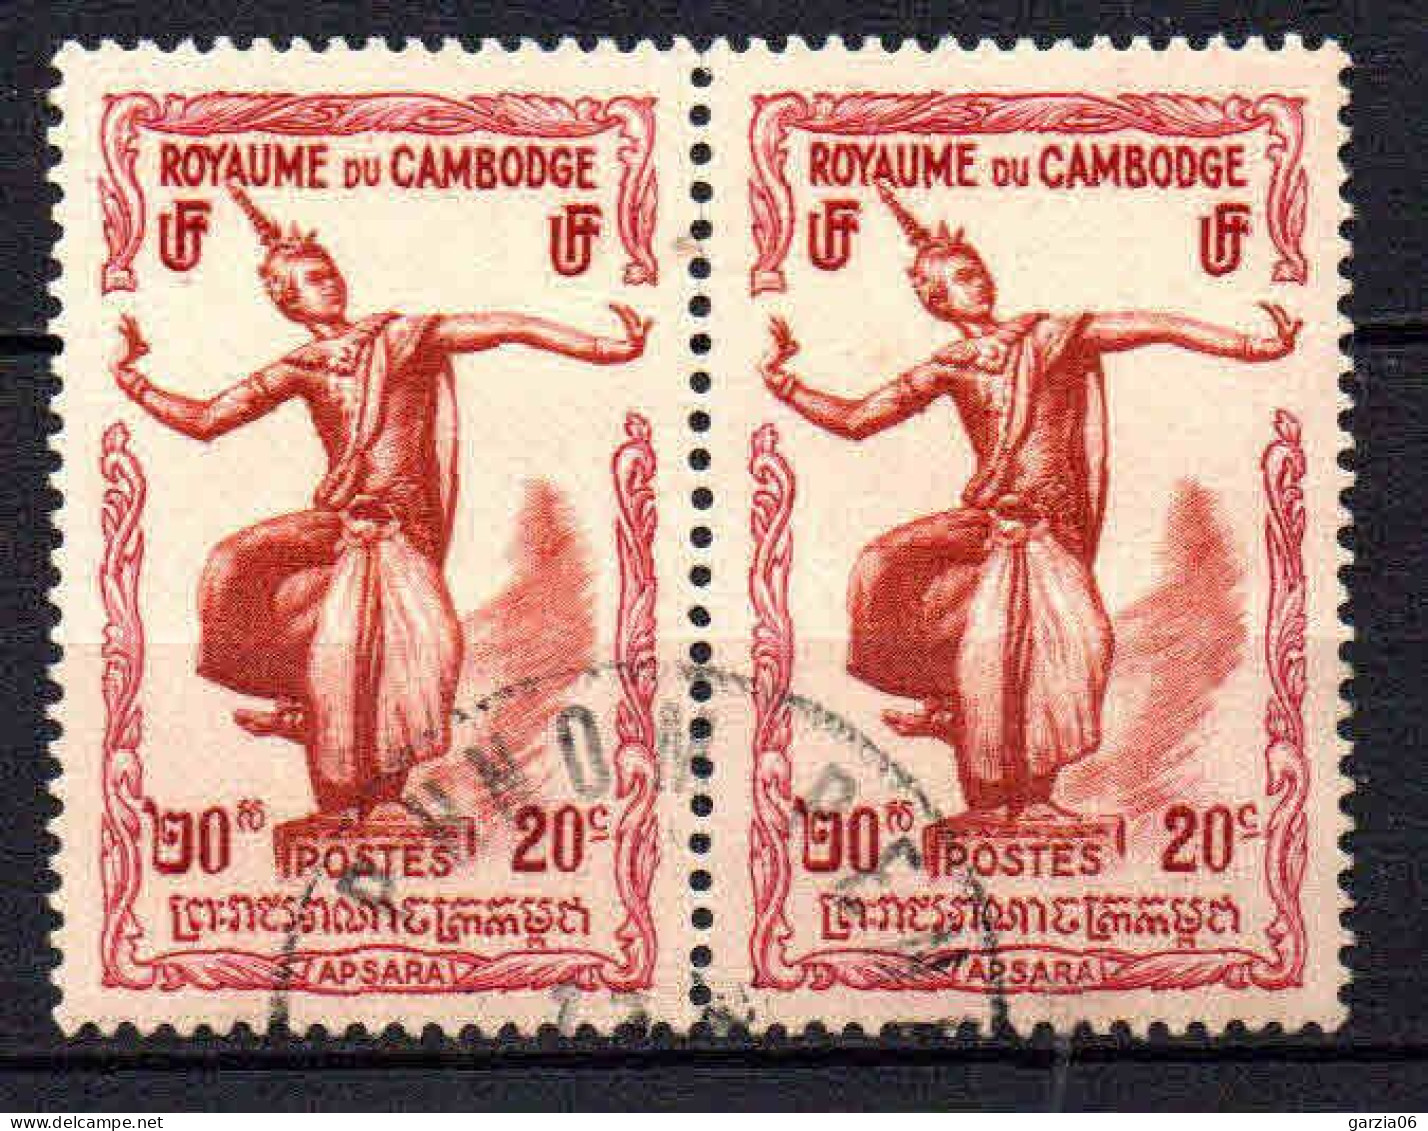 Cambodge - 1951 - Danseuses,  - N° 2 - Oblit - Used - Kambodscha